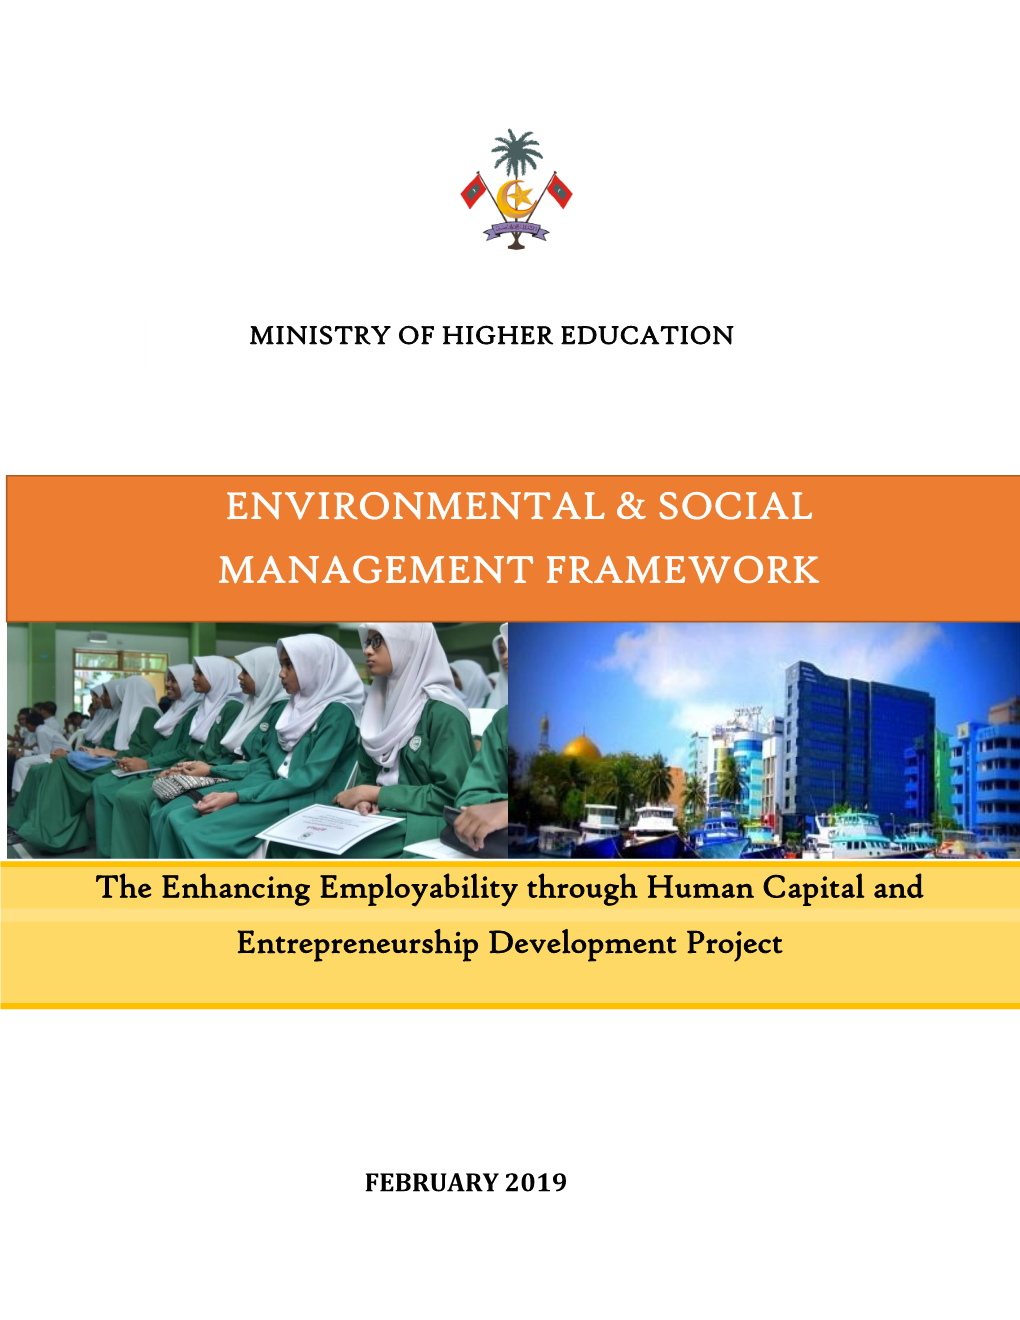 Environmental & Social Management Framework